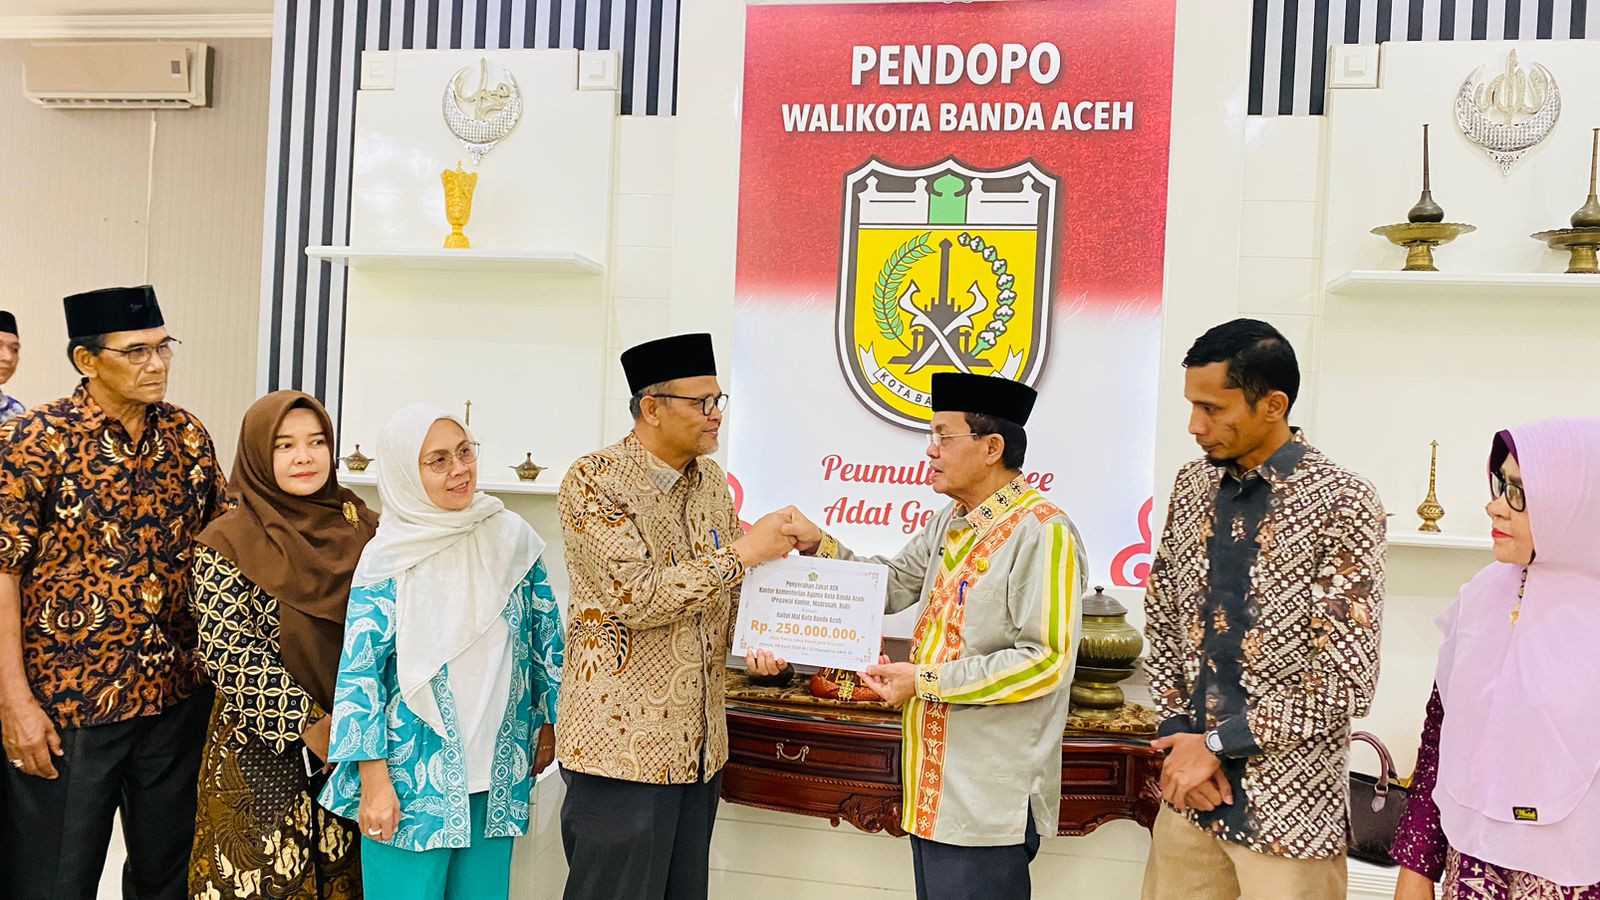 Baitul Mal Kota Banda Aceh